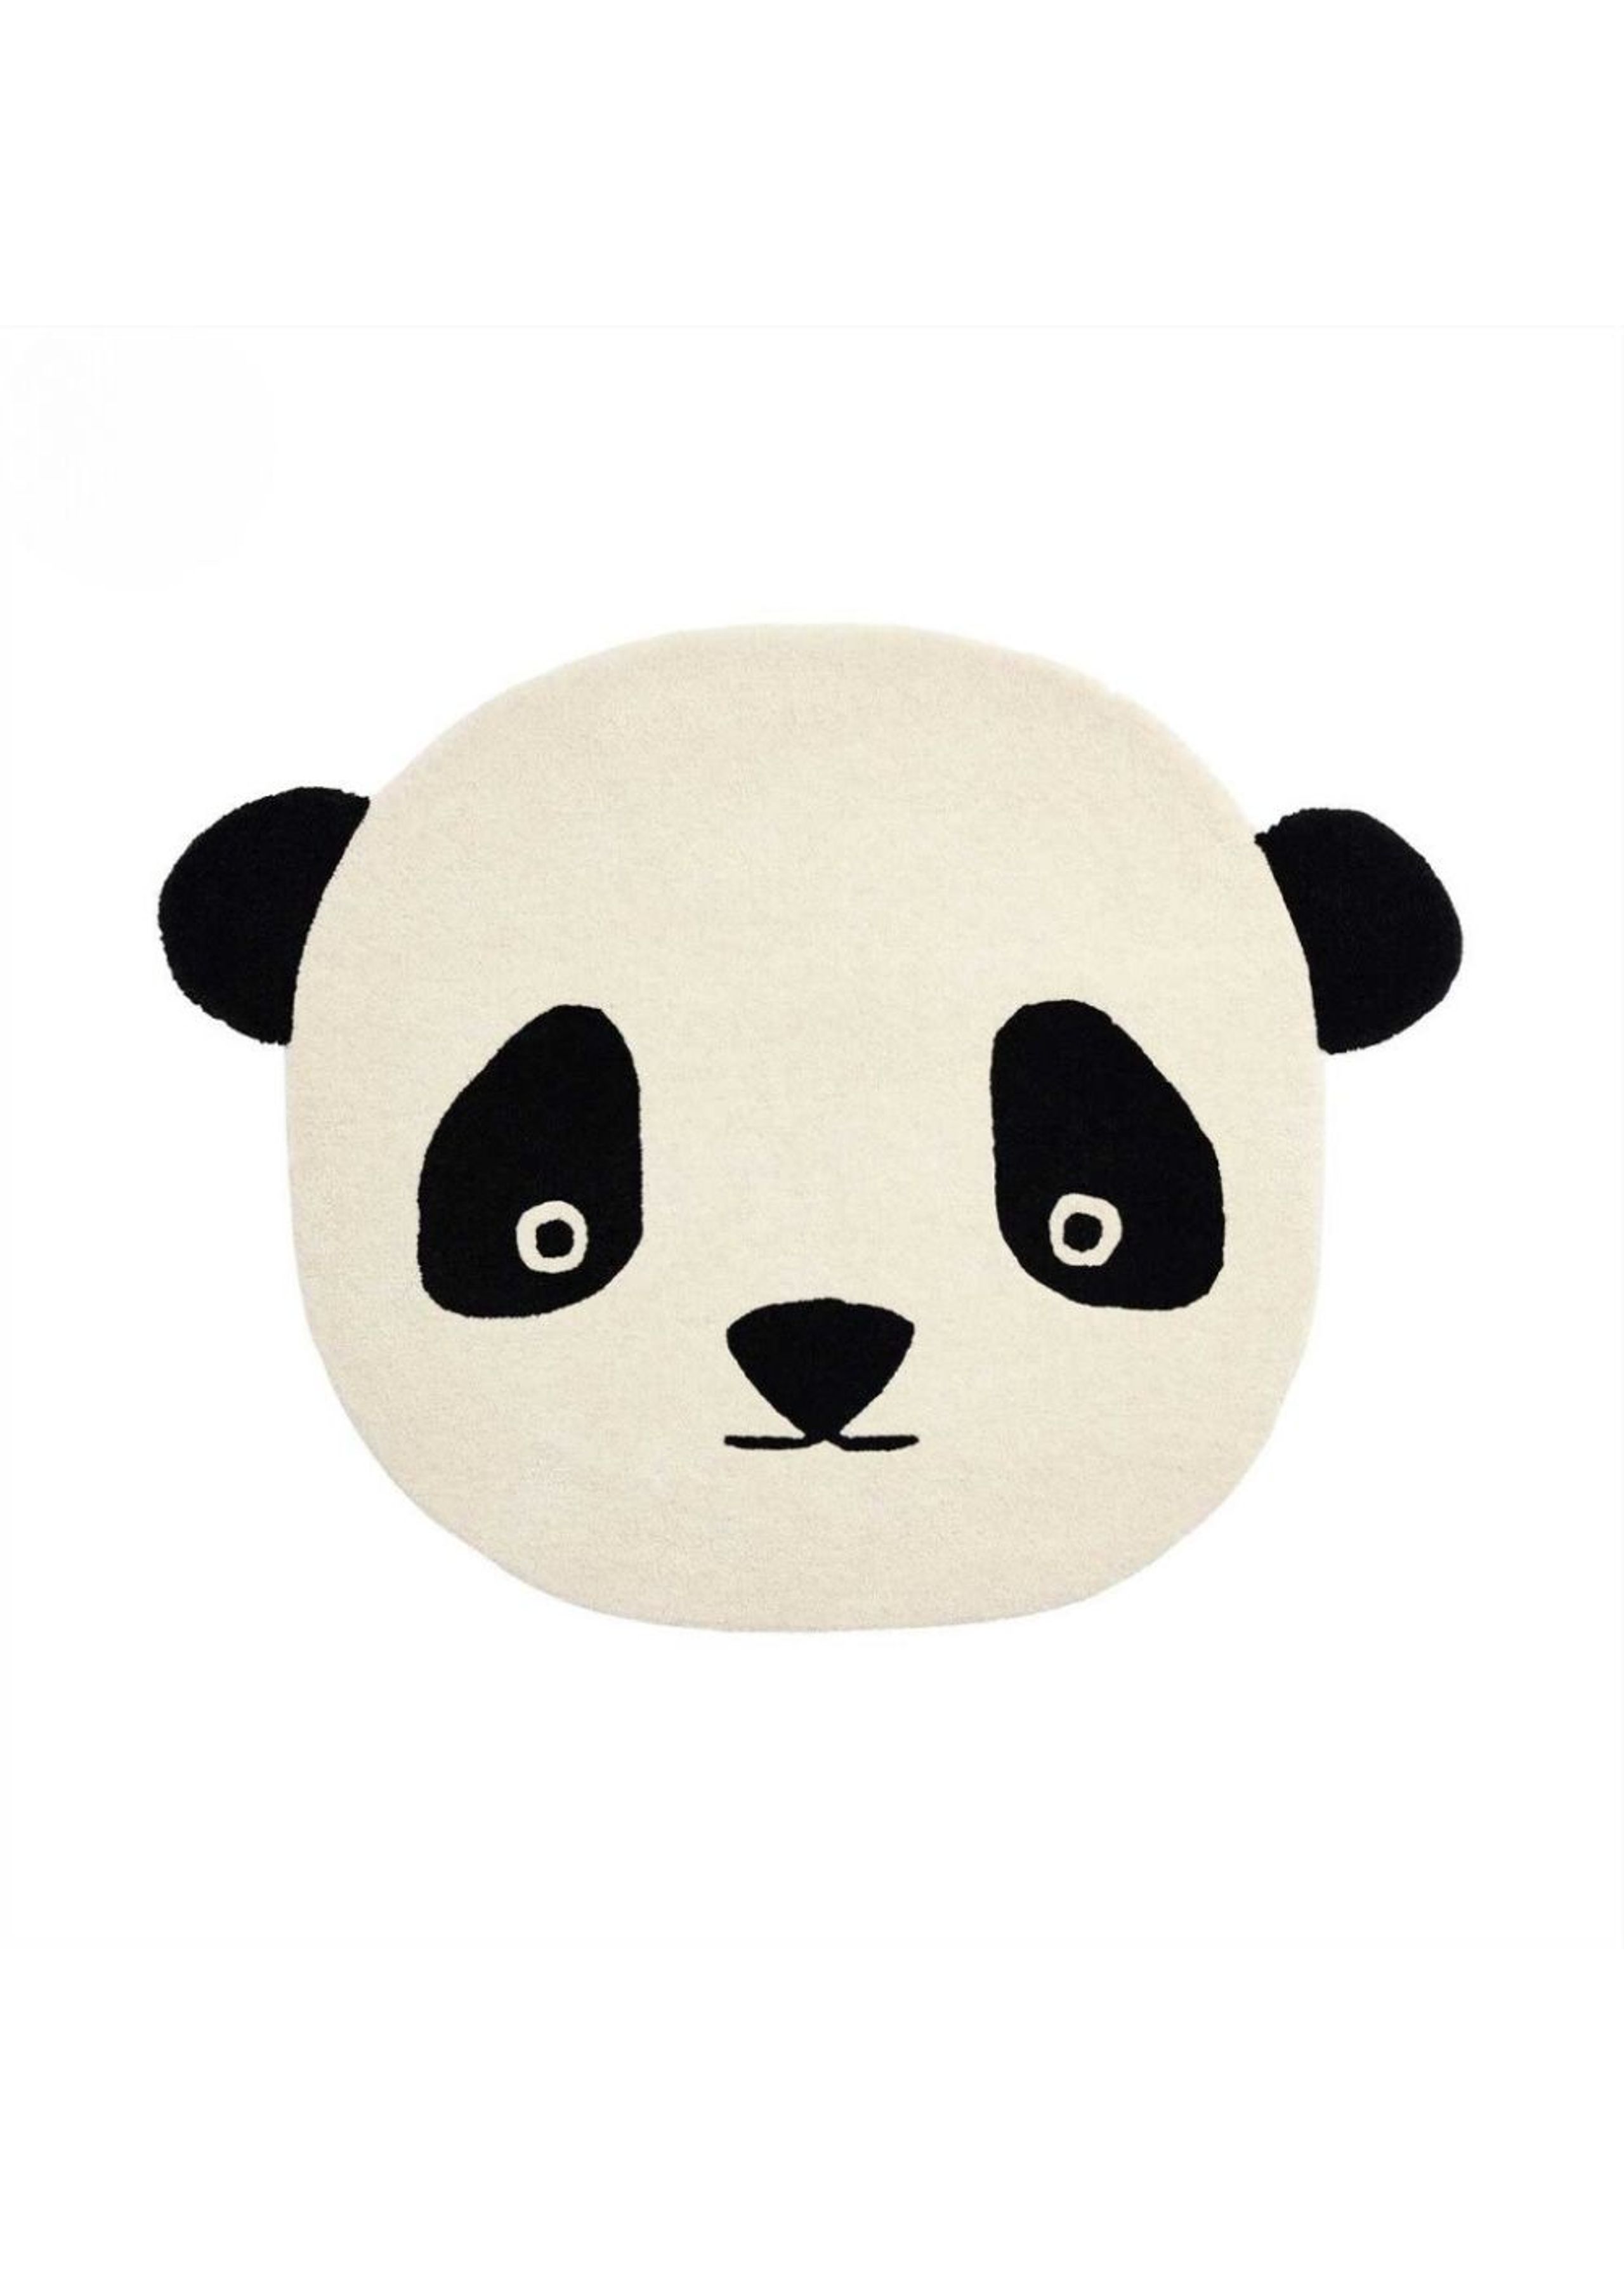 OYOY MINI - Kinderteppich - Panda Rug - 101 White / Black